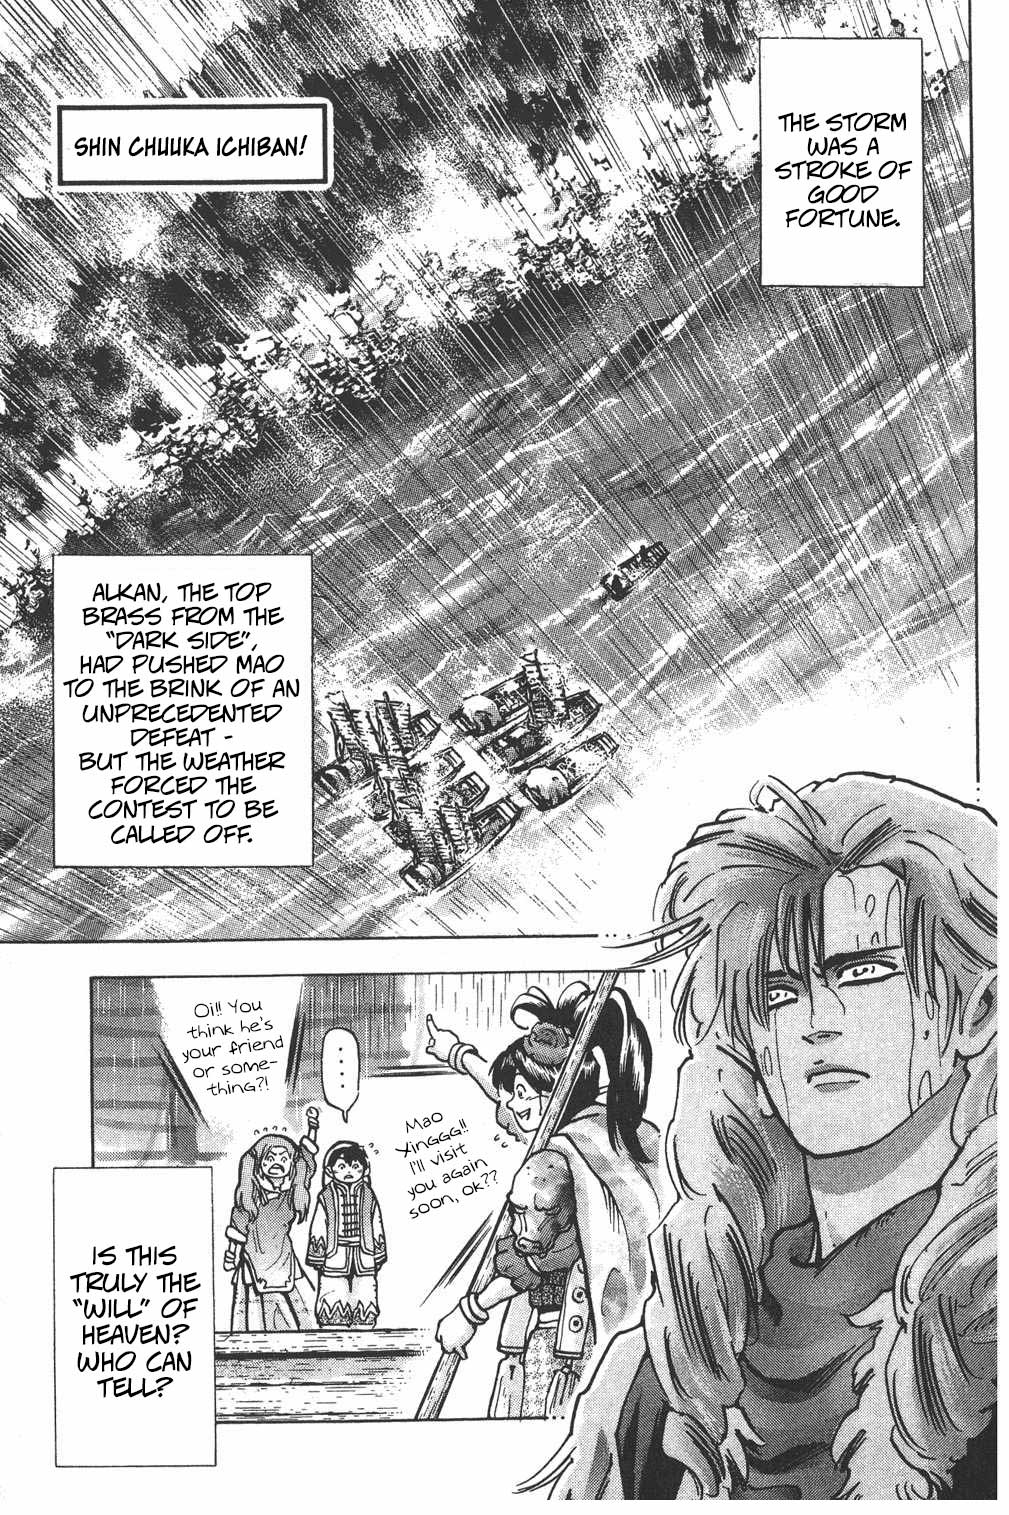 Shin Chuuka Ichiban! Vol. 8 Ch. 65 To the End of the Yangtze